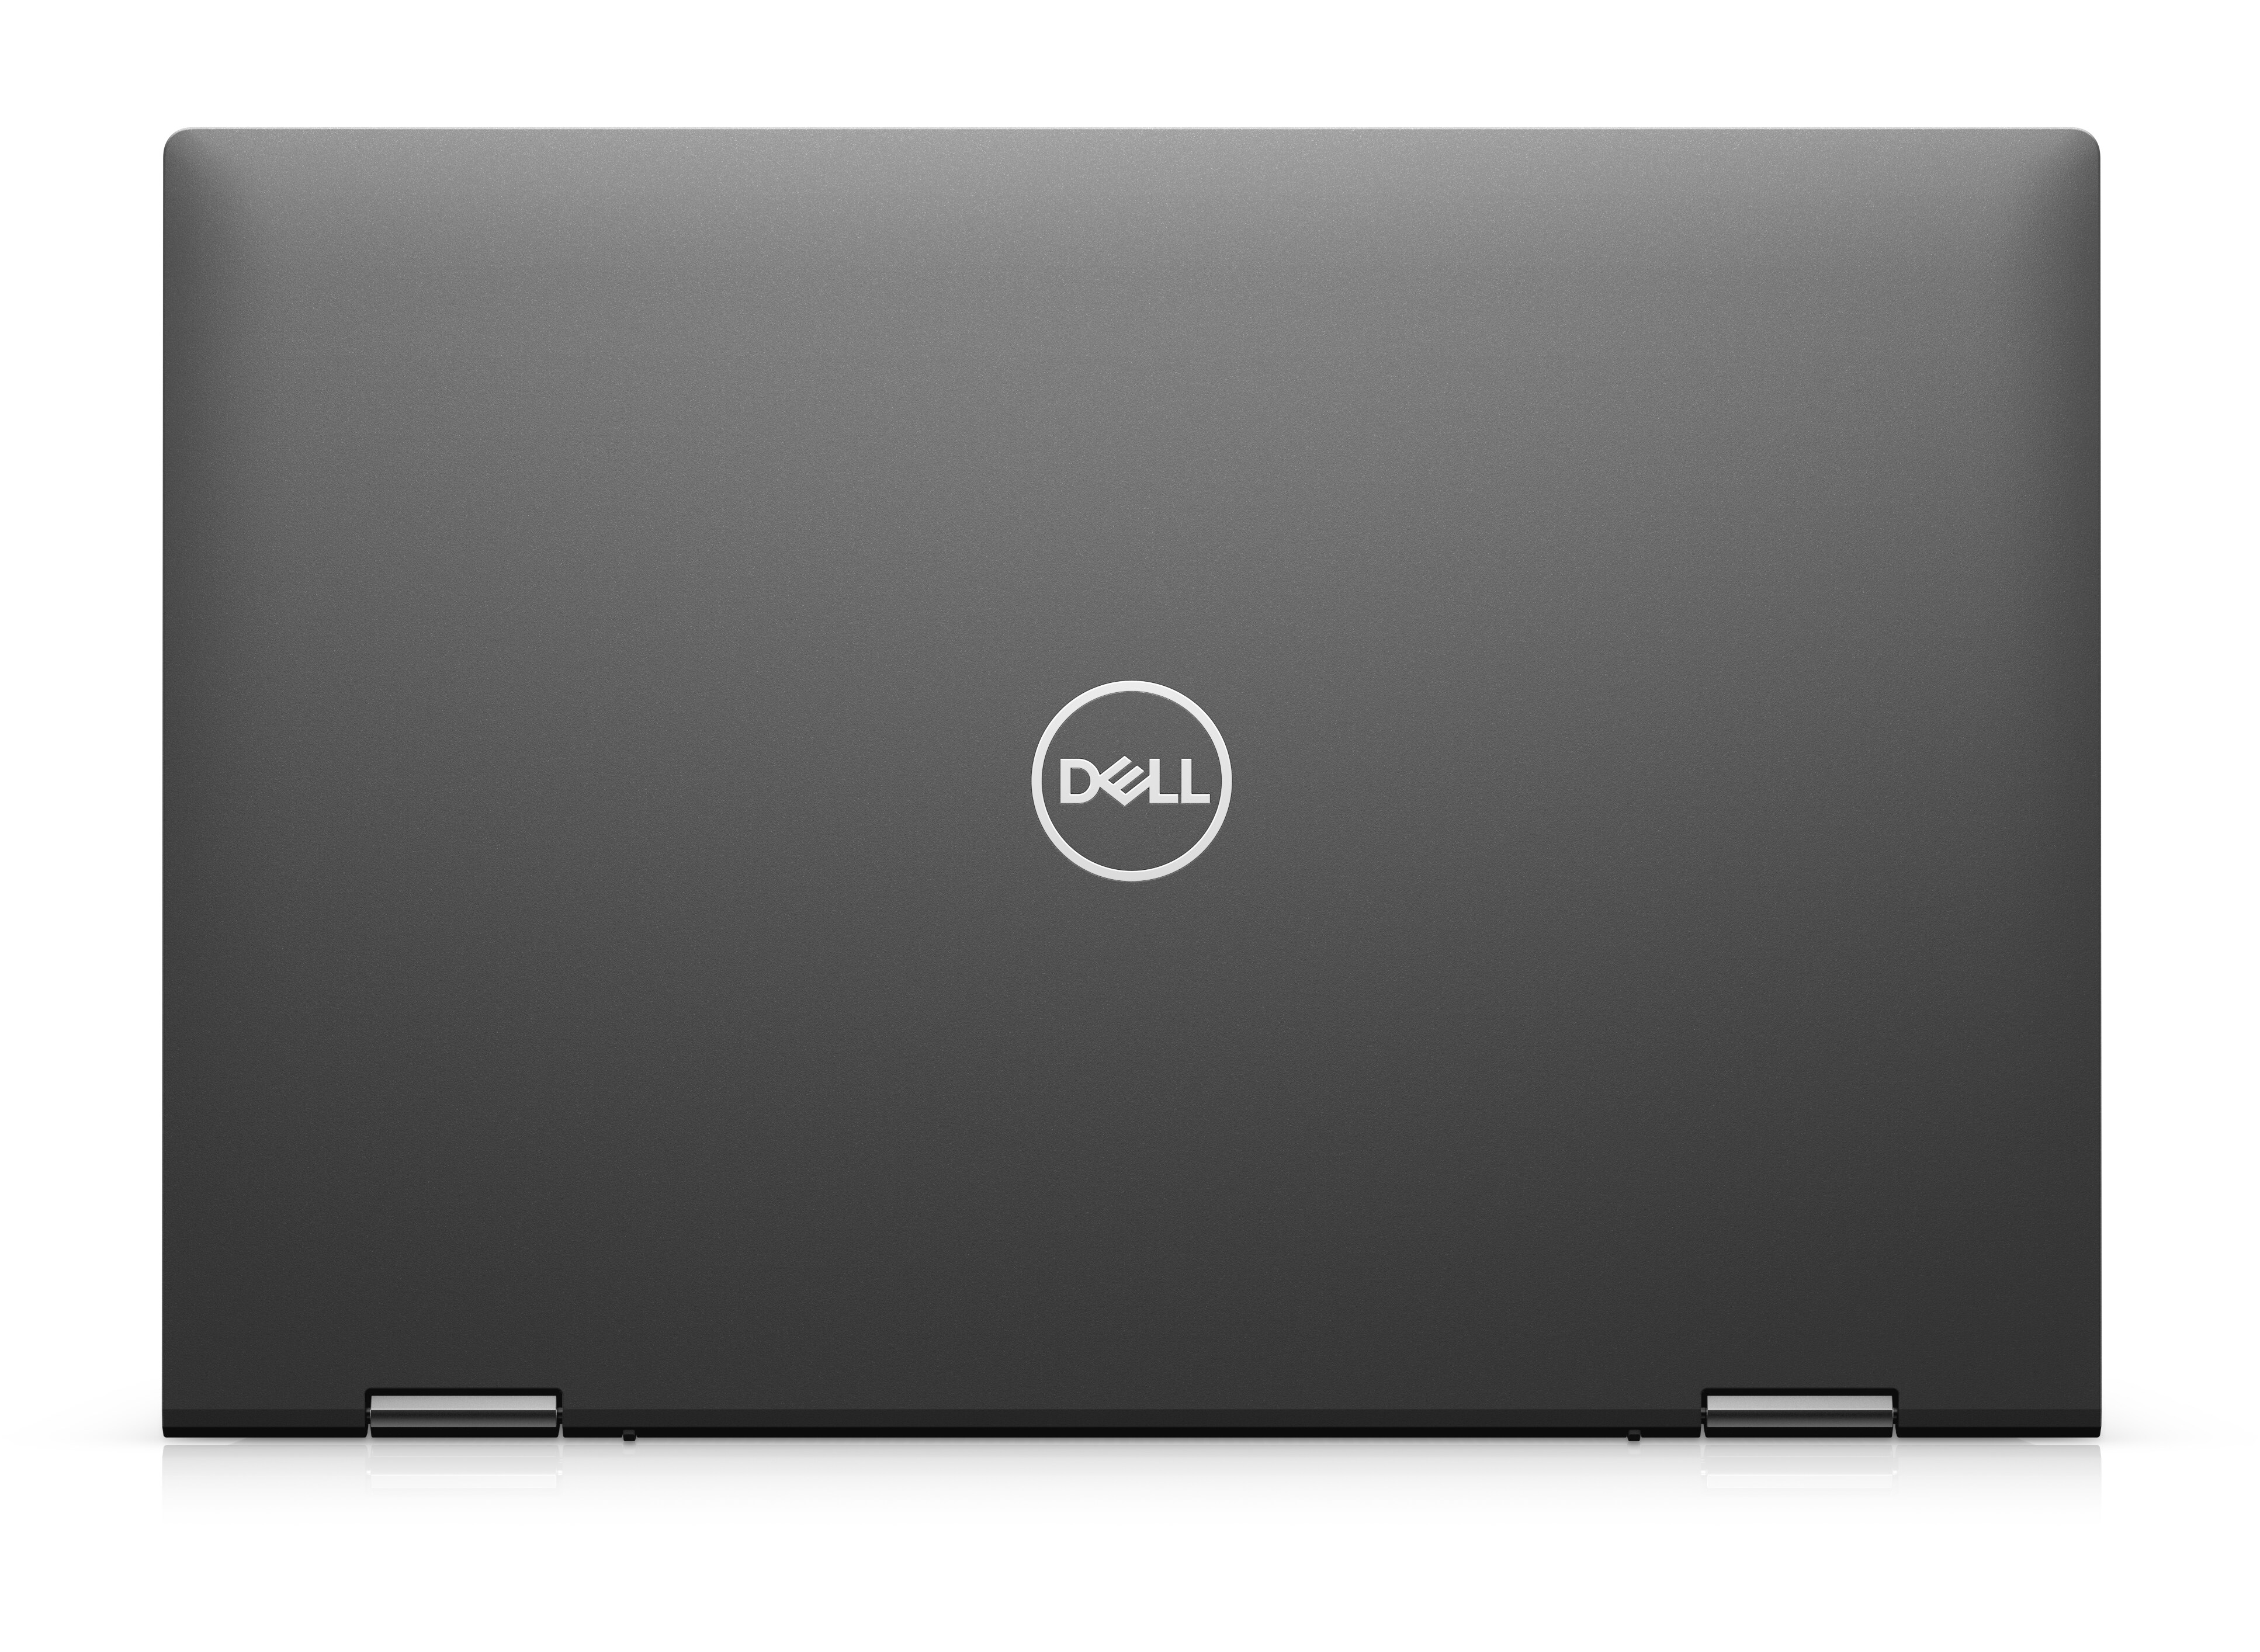 Dell Inspiron 13インチ 7000 (7306) 2-in-1 ノートパソコン | Dell 